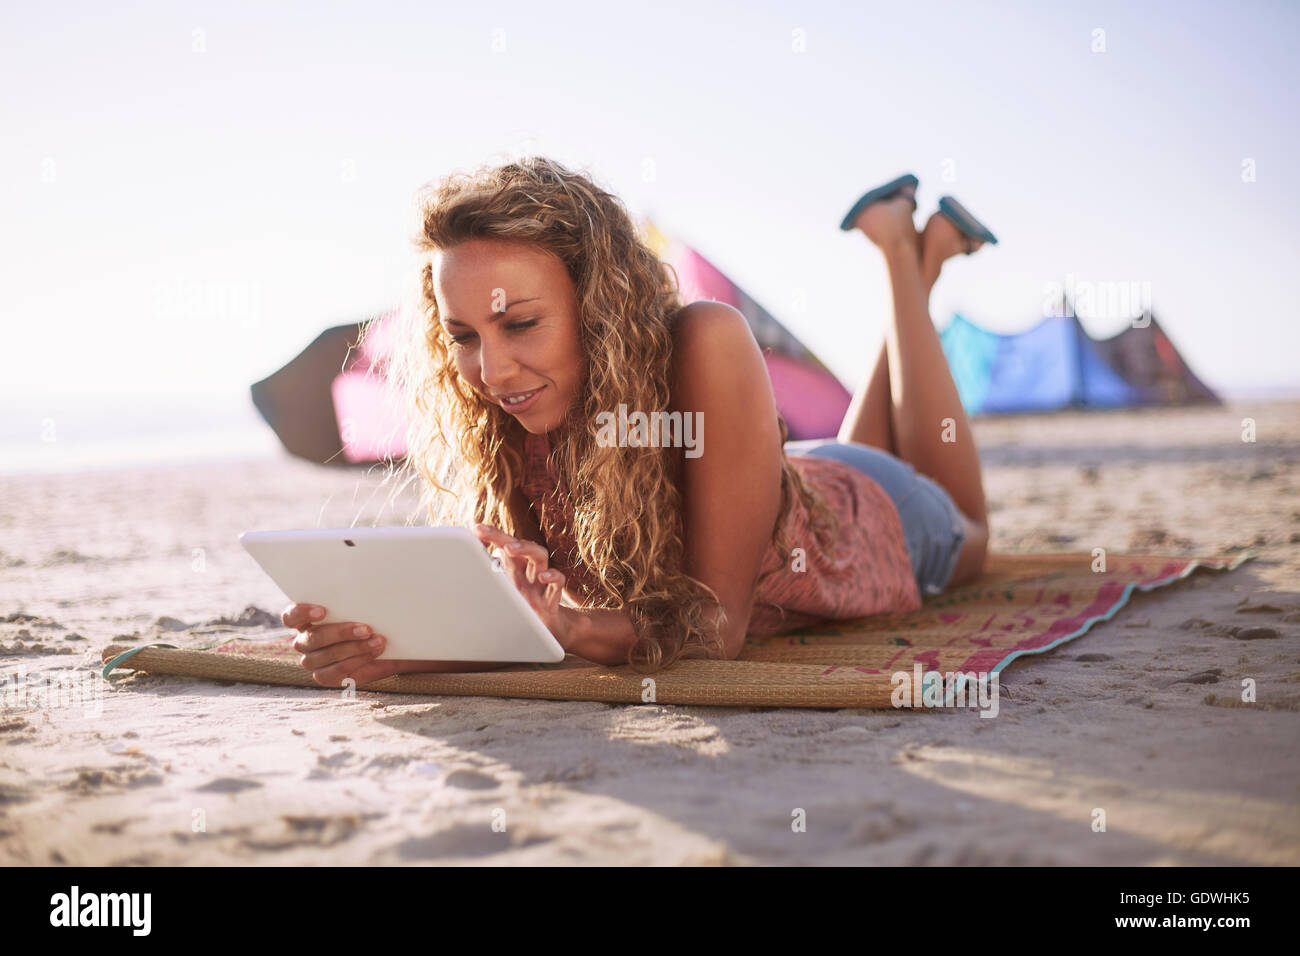 Woman reading digital tablet on beach mat Stock Photo